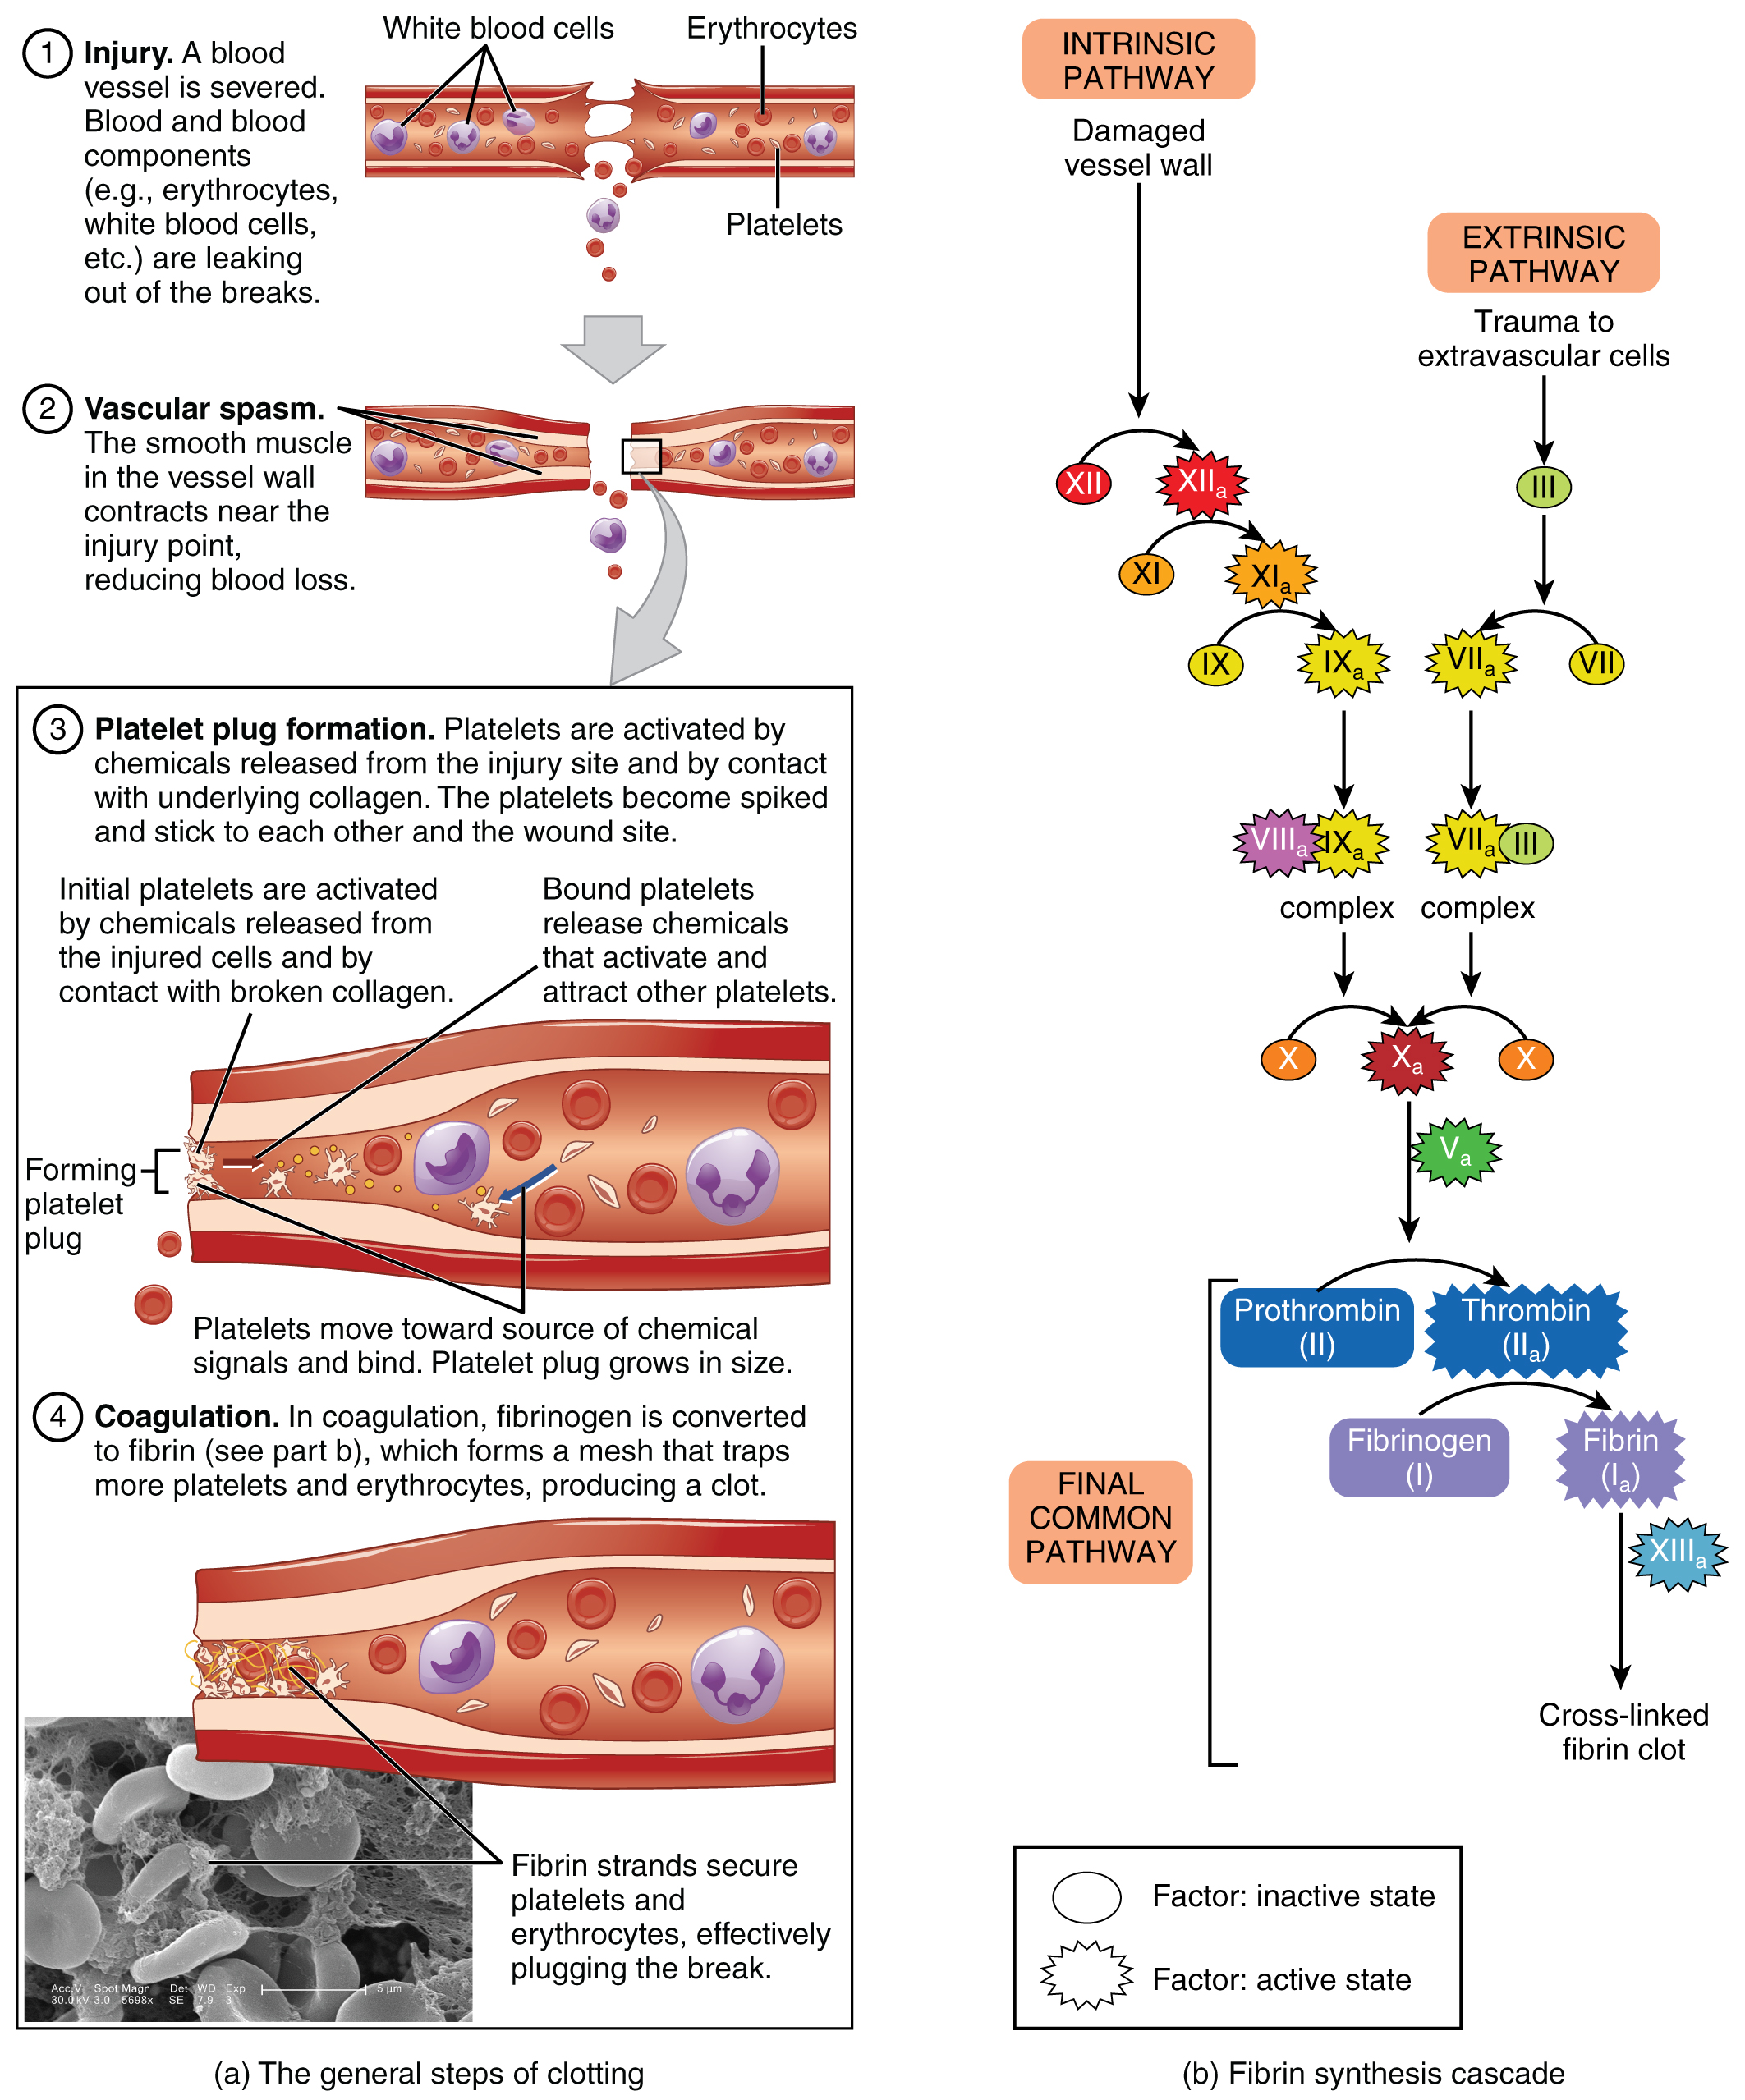 Process of clotting blood. Image description available.